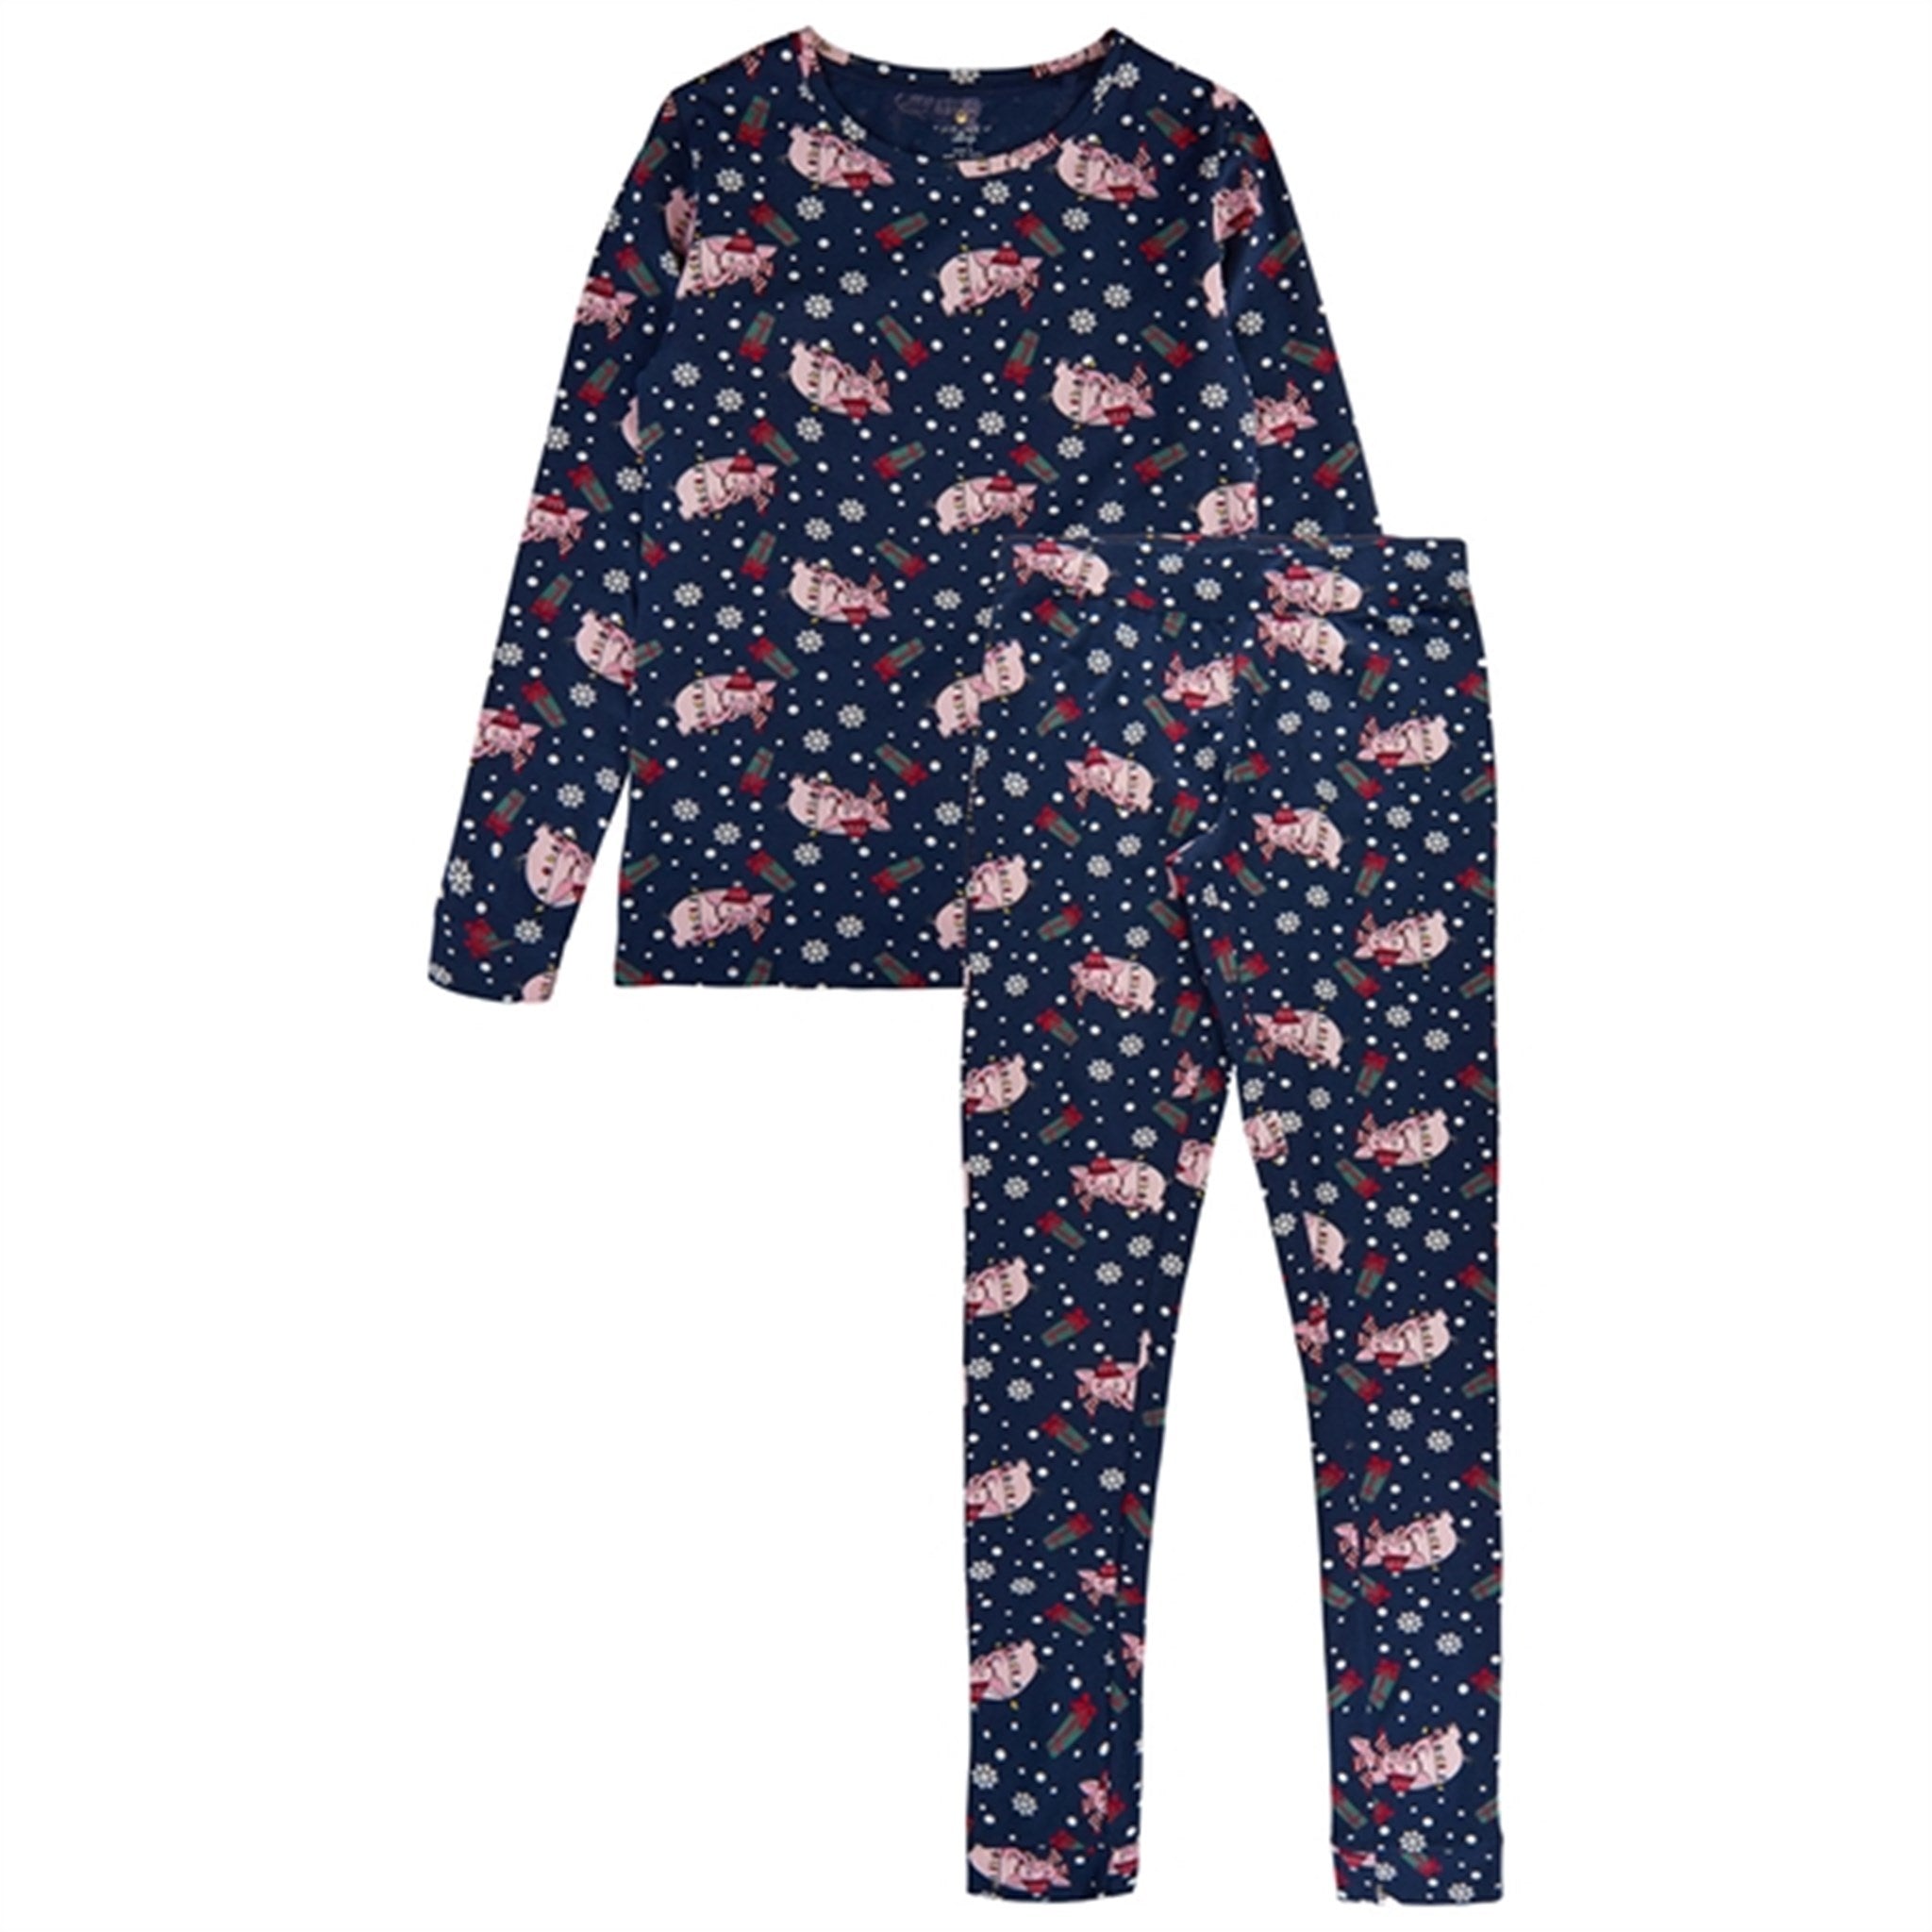 The New Navy Blazer Holiday Pyjamas Adult